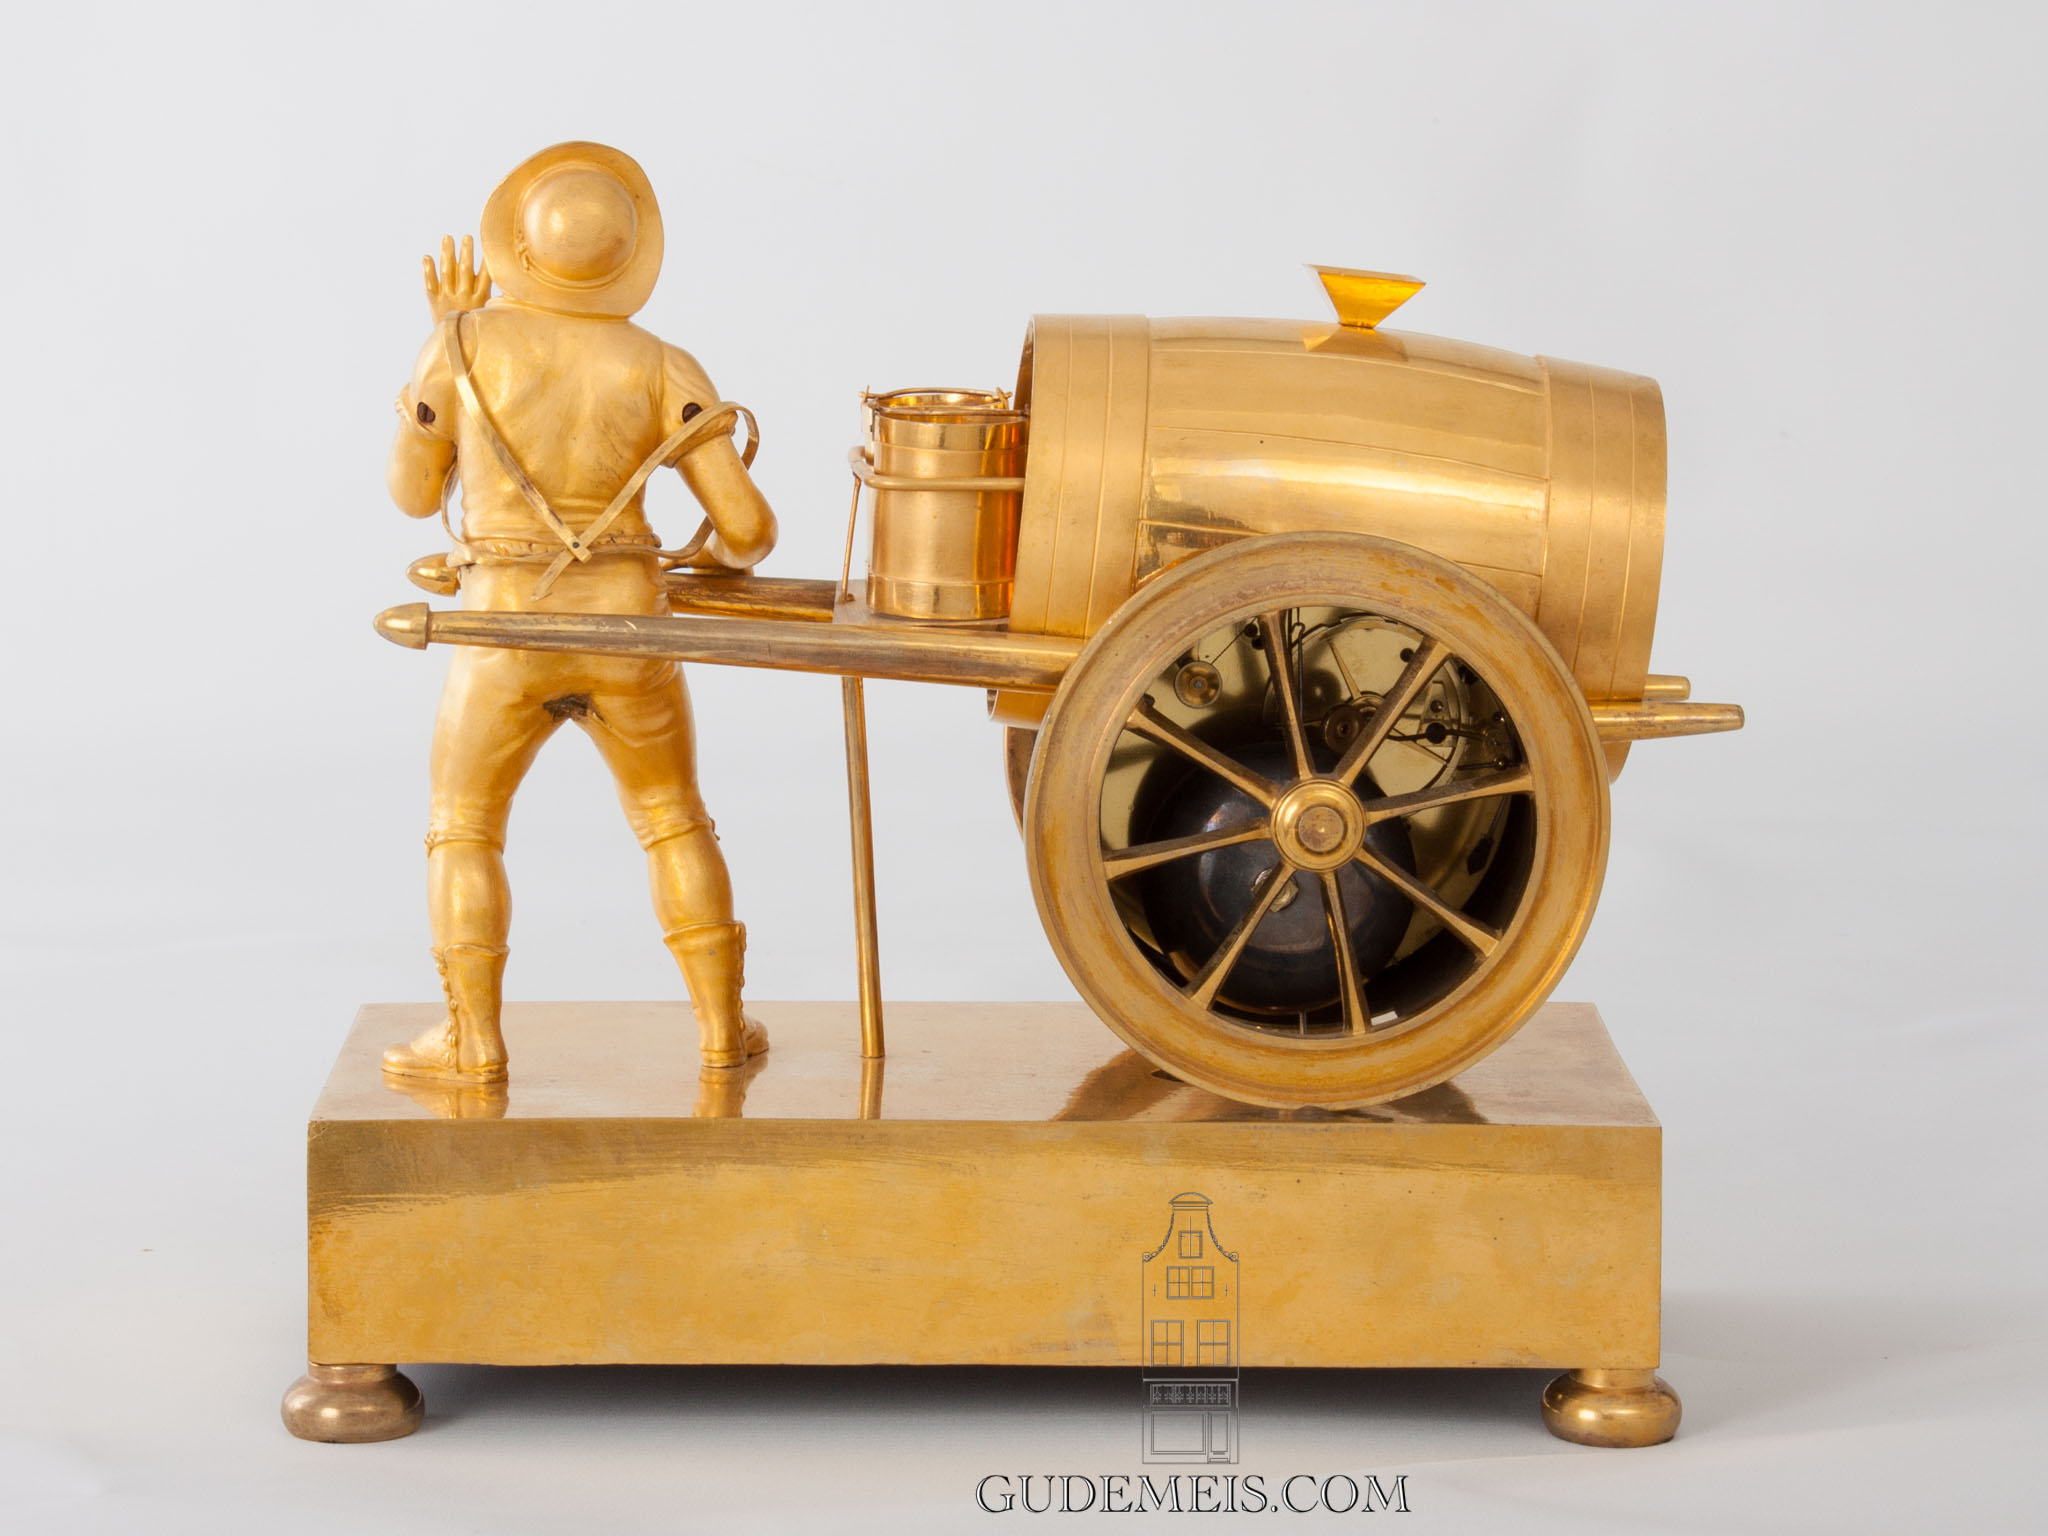 French-Empire-ormolu-gilt-bronze-sculptural-striking-antique-mantel-clock-waterseller-